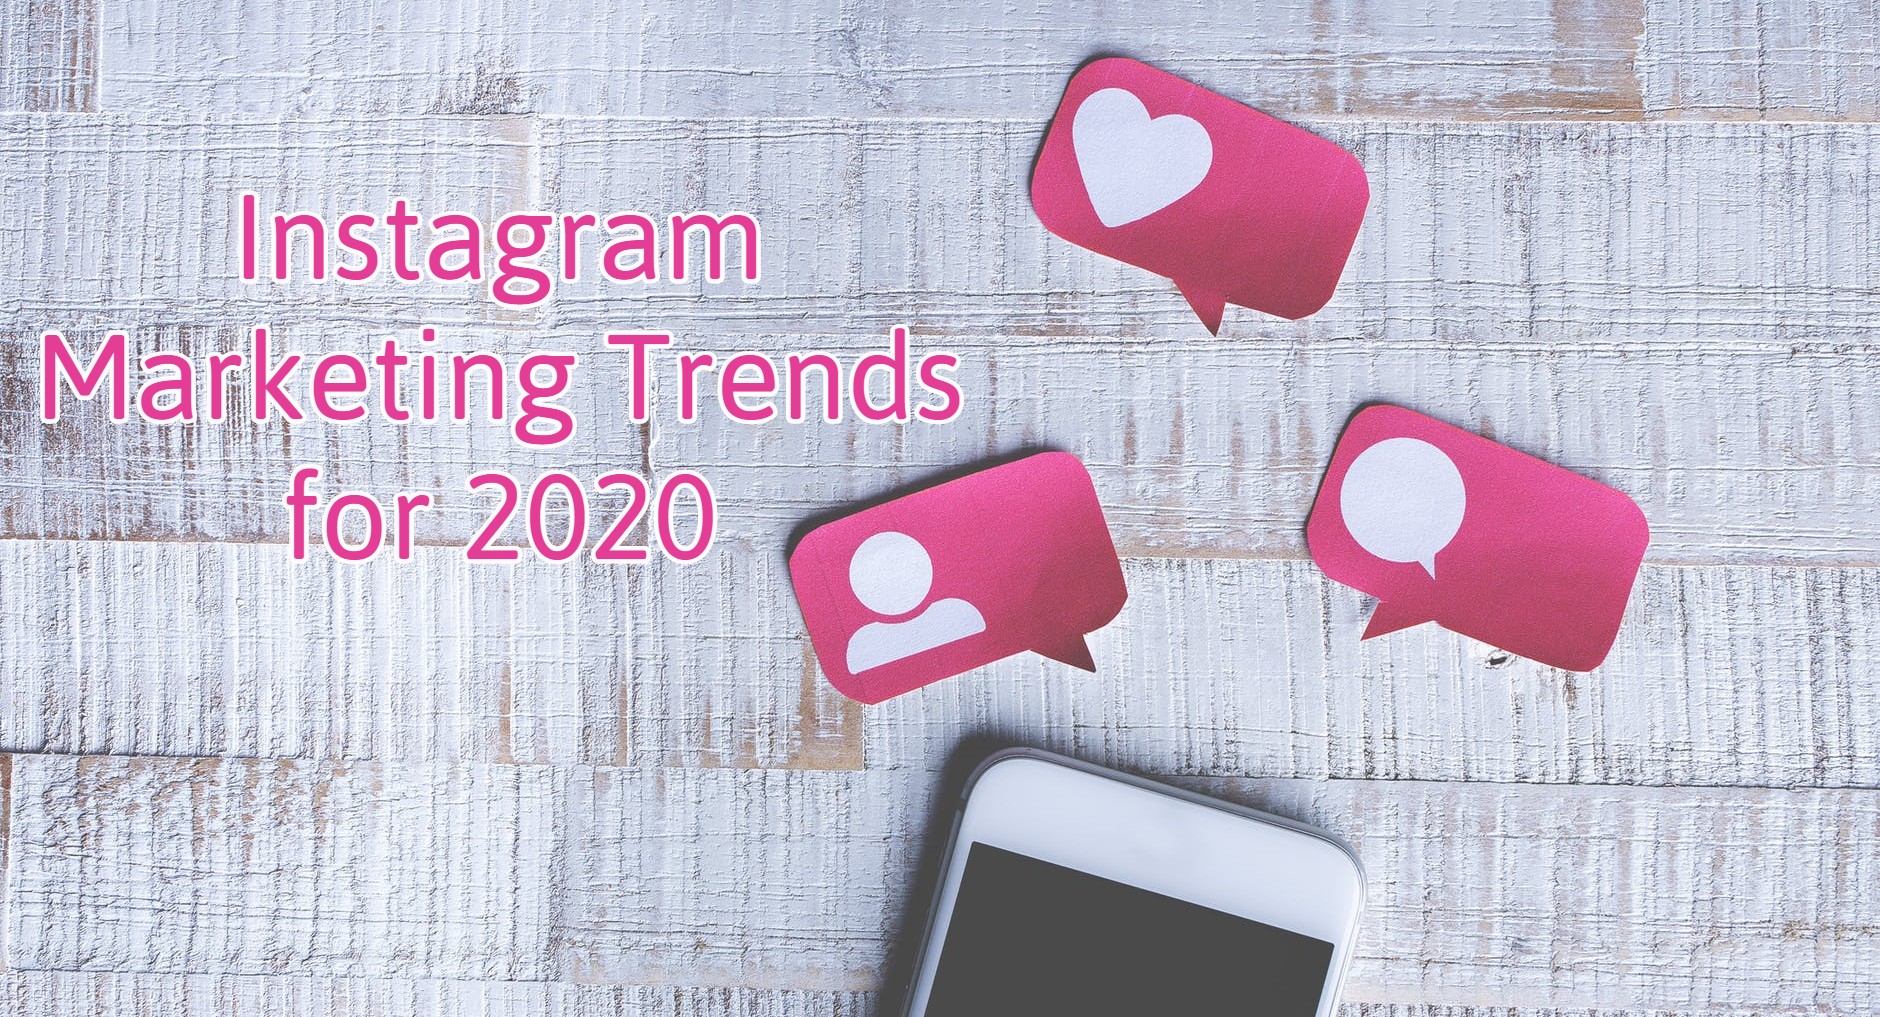 Instagram Marketing Trends for 2020